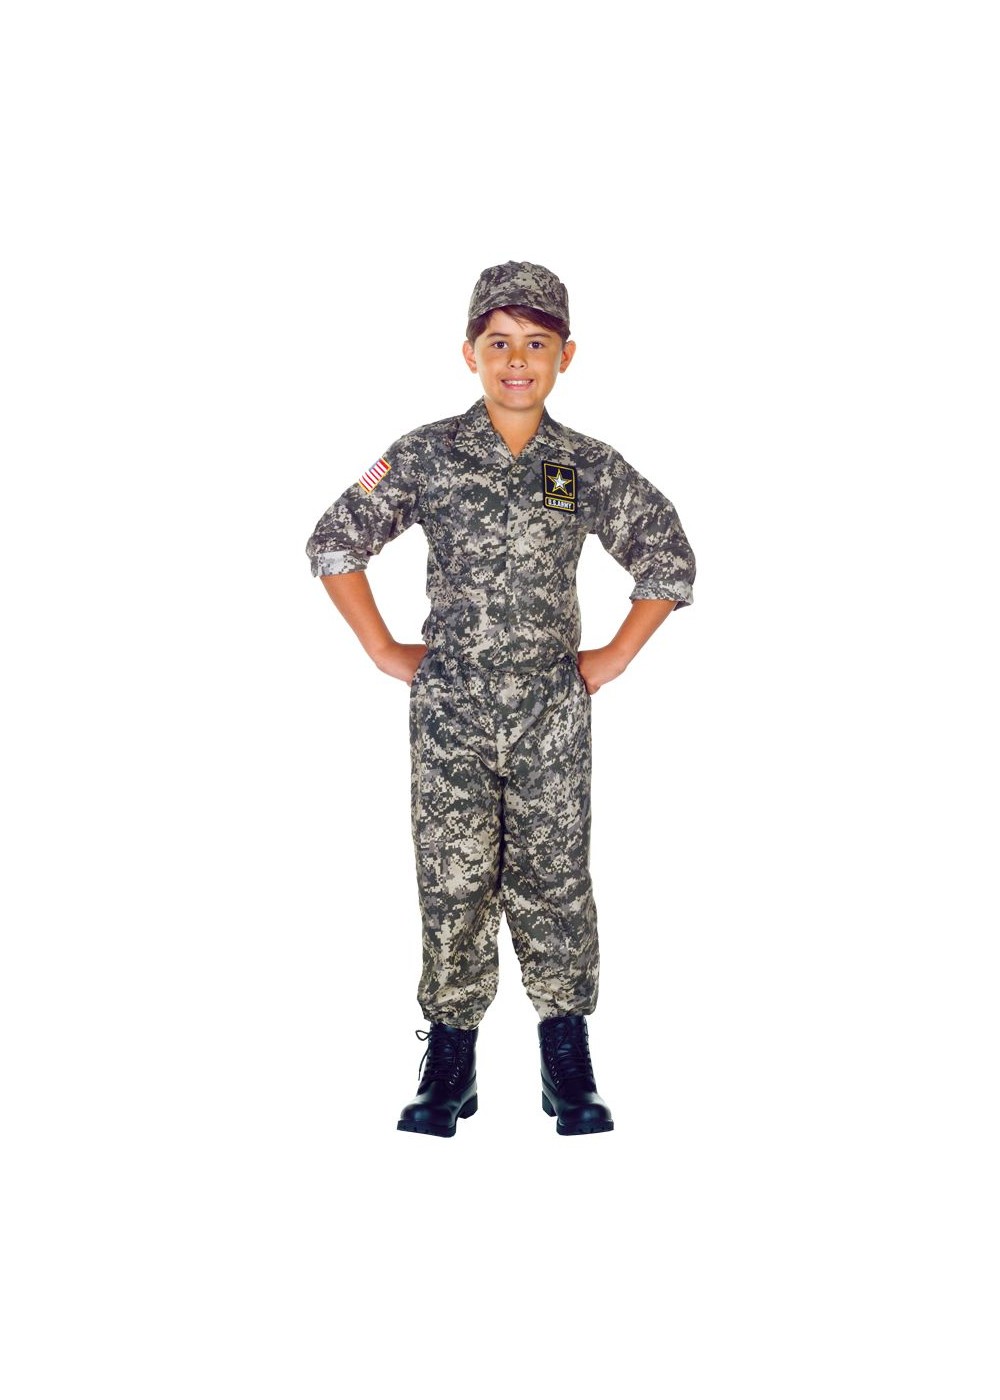  Us Army Boys Costume